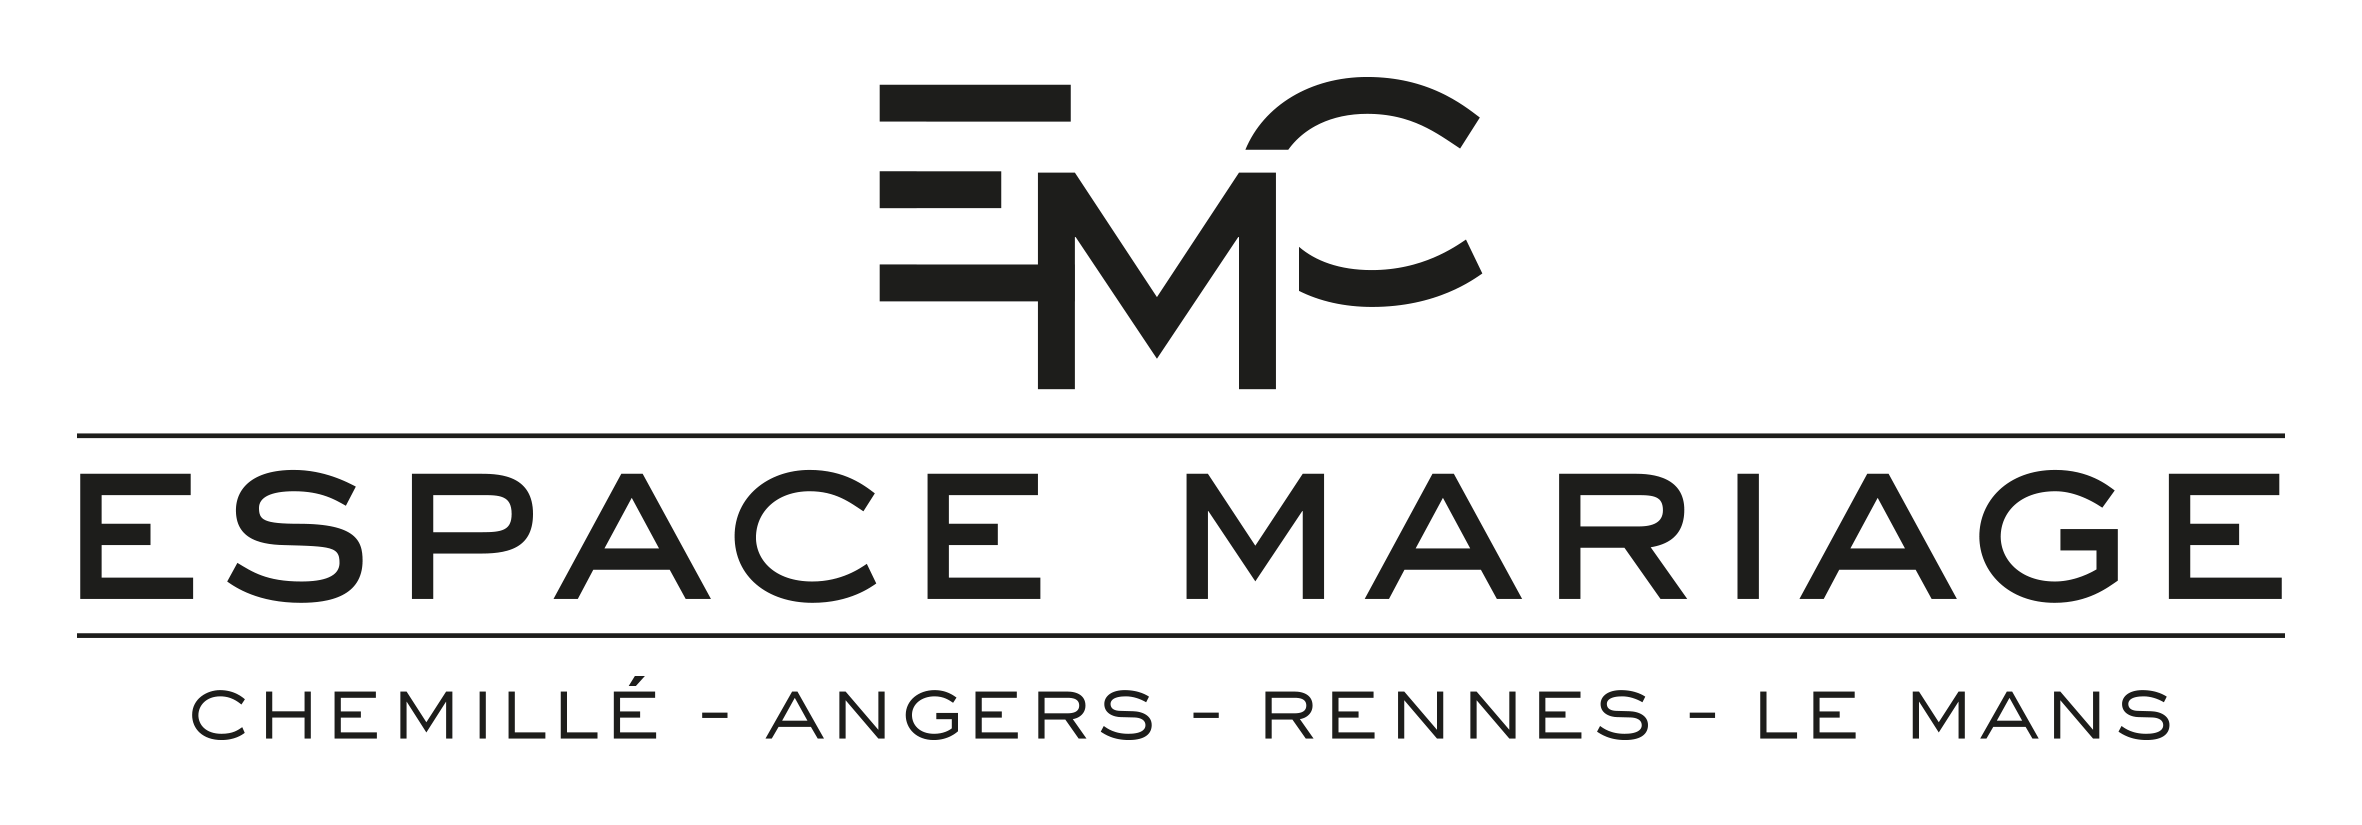 Espace Mariage